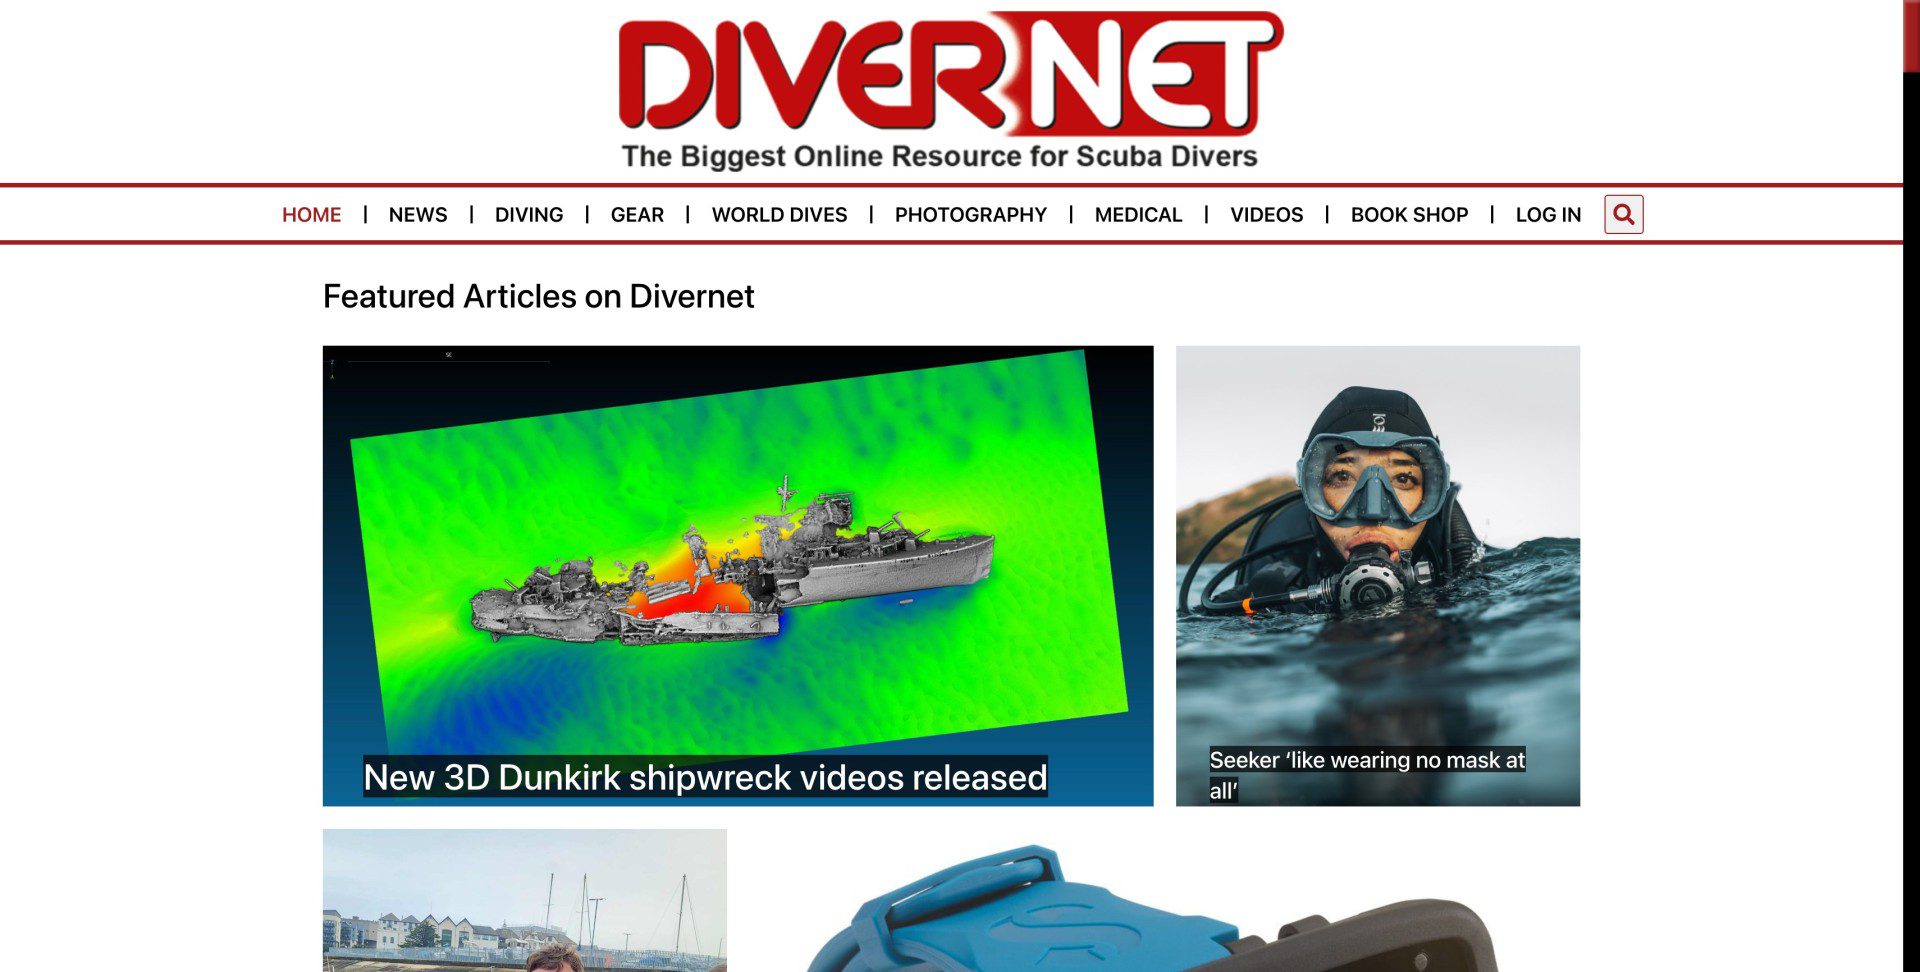 Divernet Scuba Diving Scuba-News-Scuba-Gear-Underwater-Photography